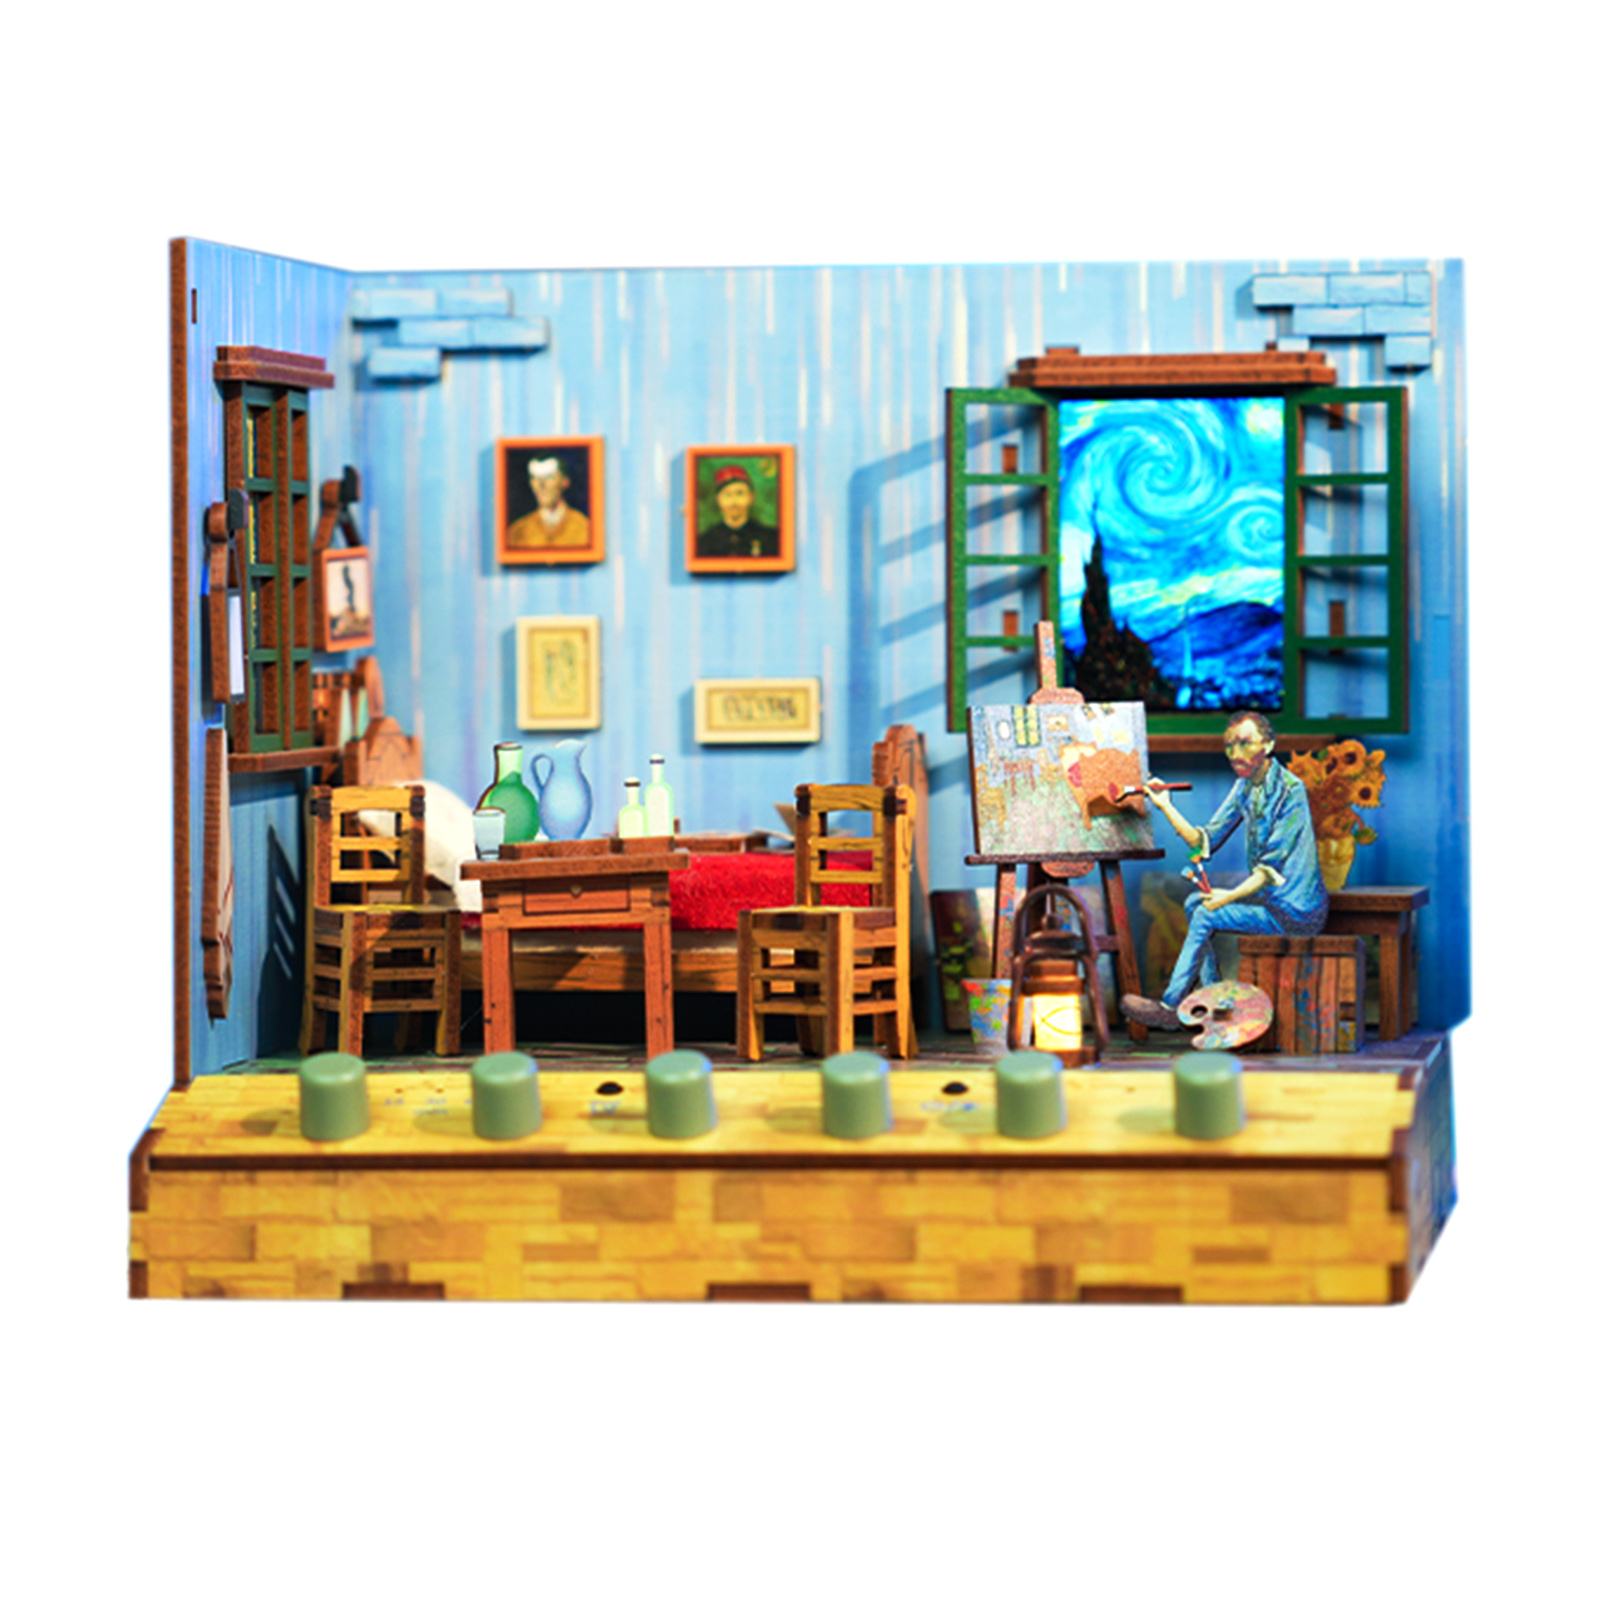 Van Gogh's Dream DIY Music Scene Dollhouse